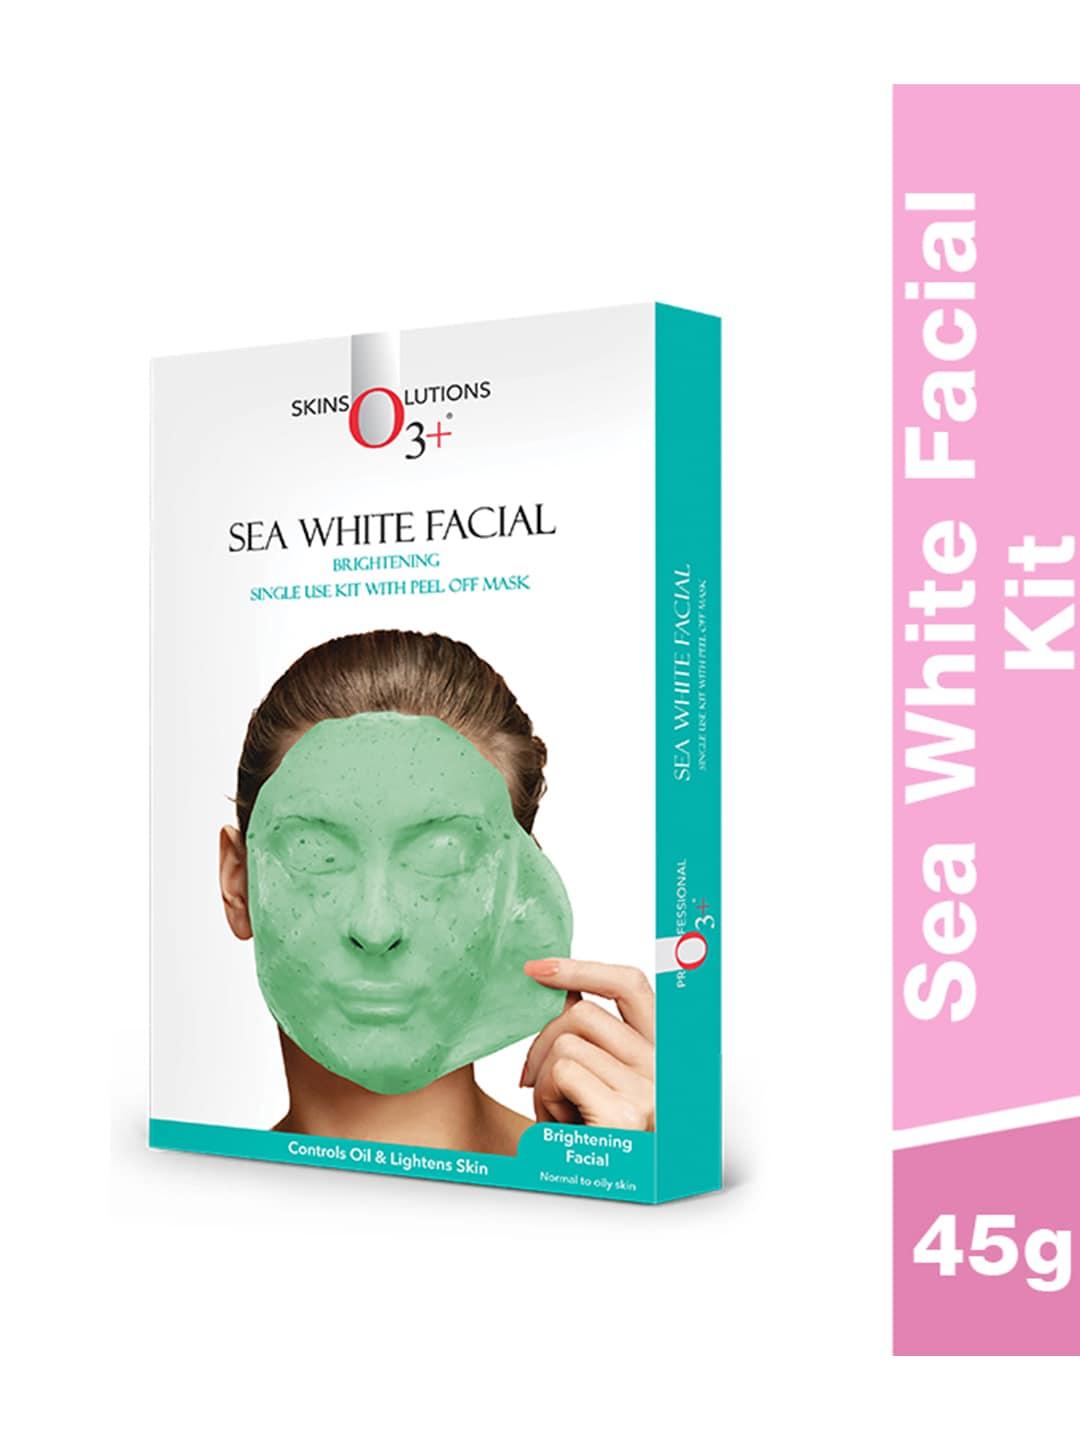 O3 Sea White Facial Kit with Peel Off-Mask - Controls Oil & Lightens Skin - Single Use